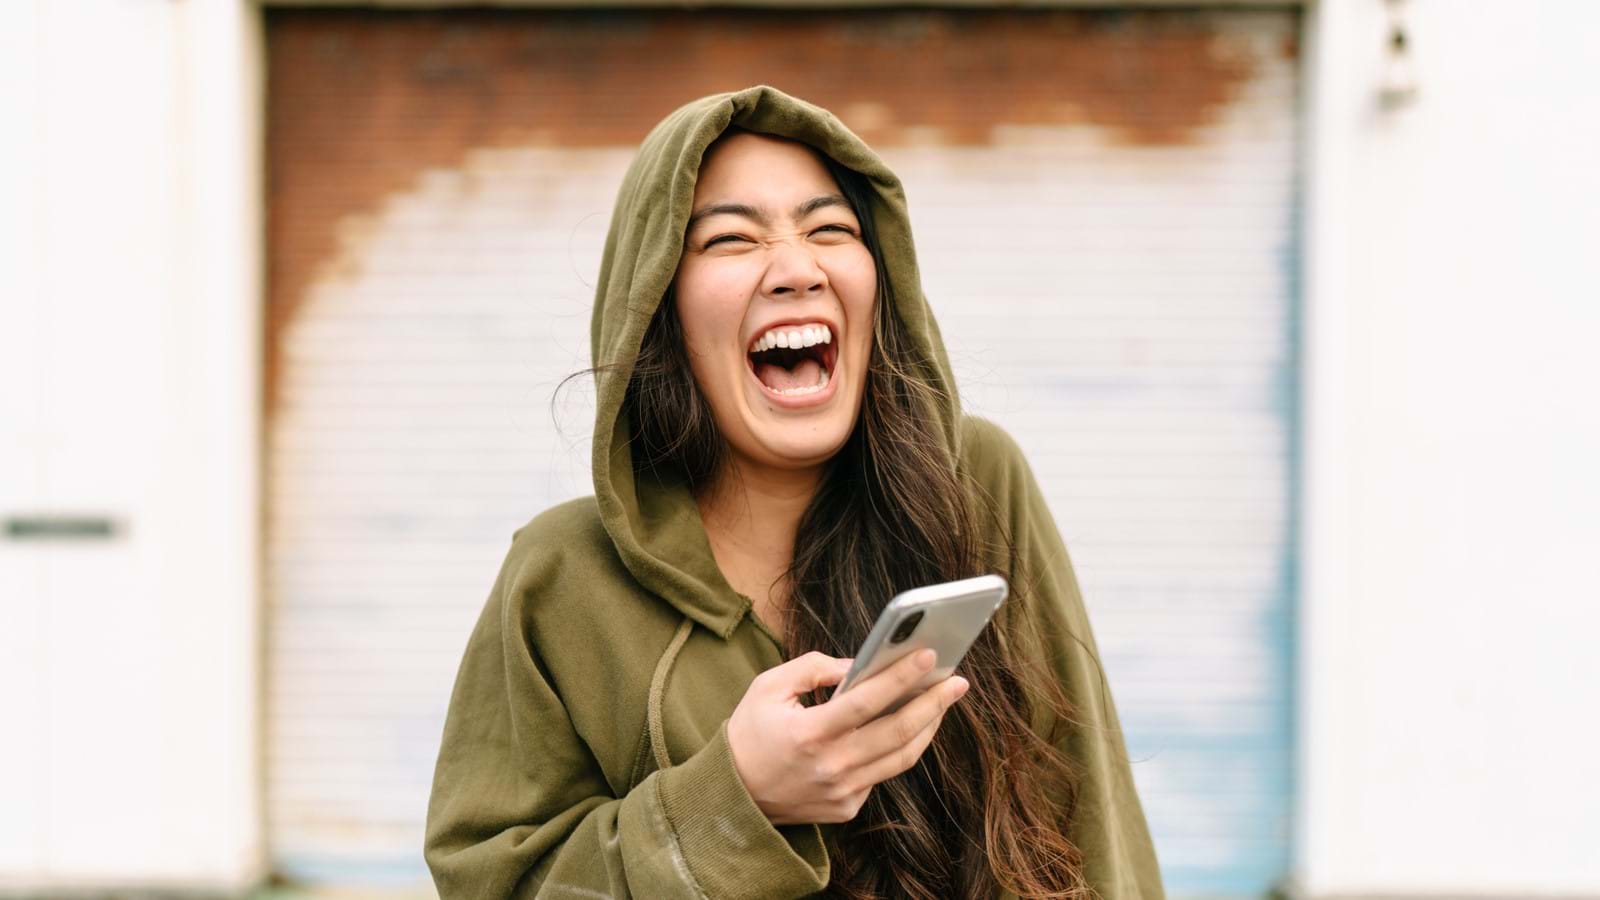 Woman smiling using mobile phone